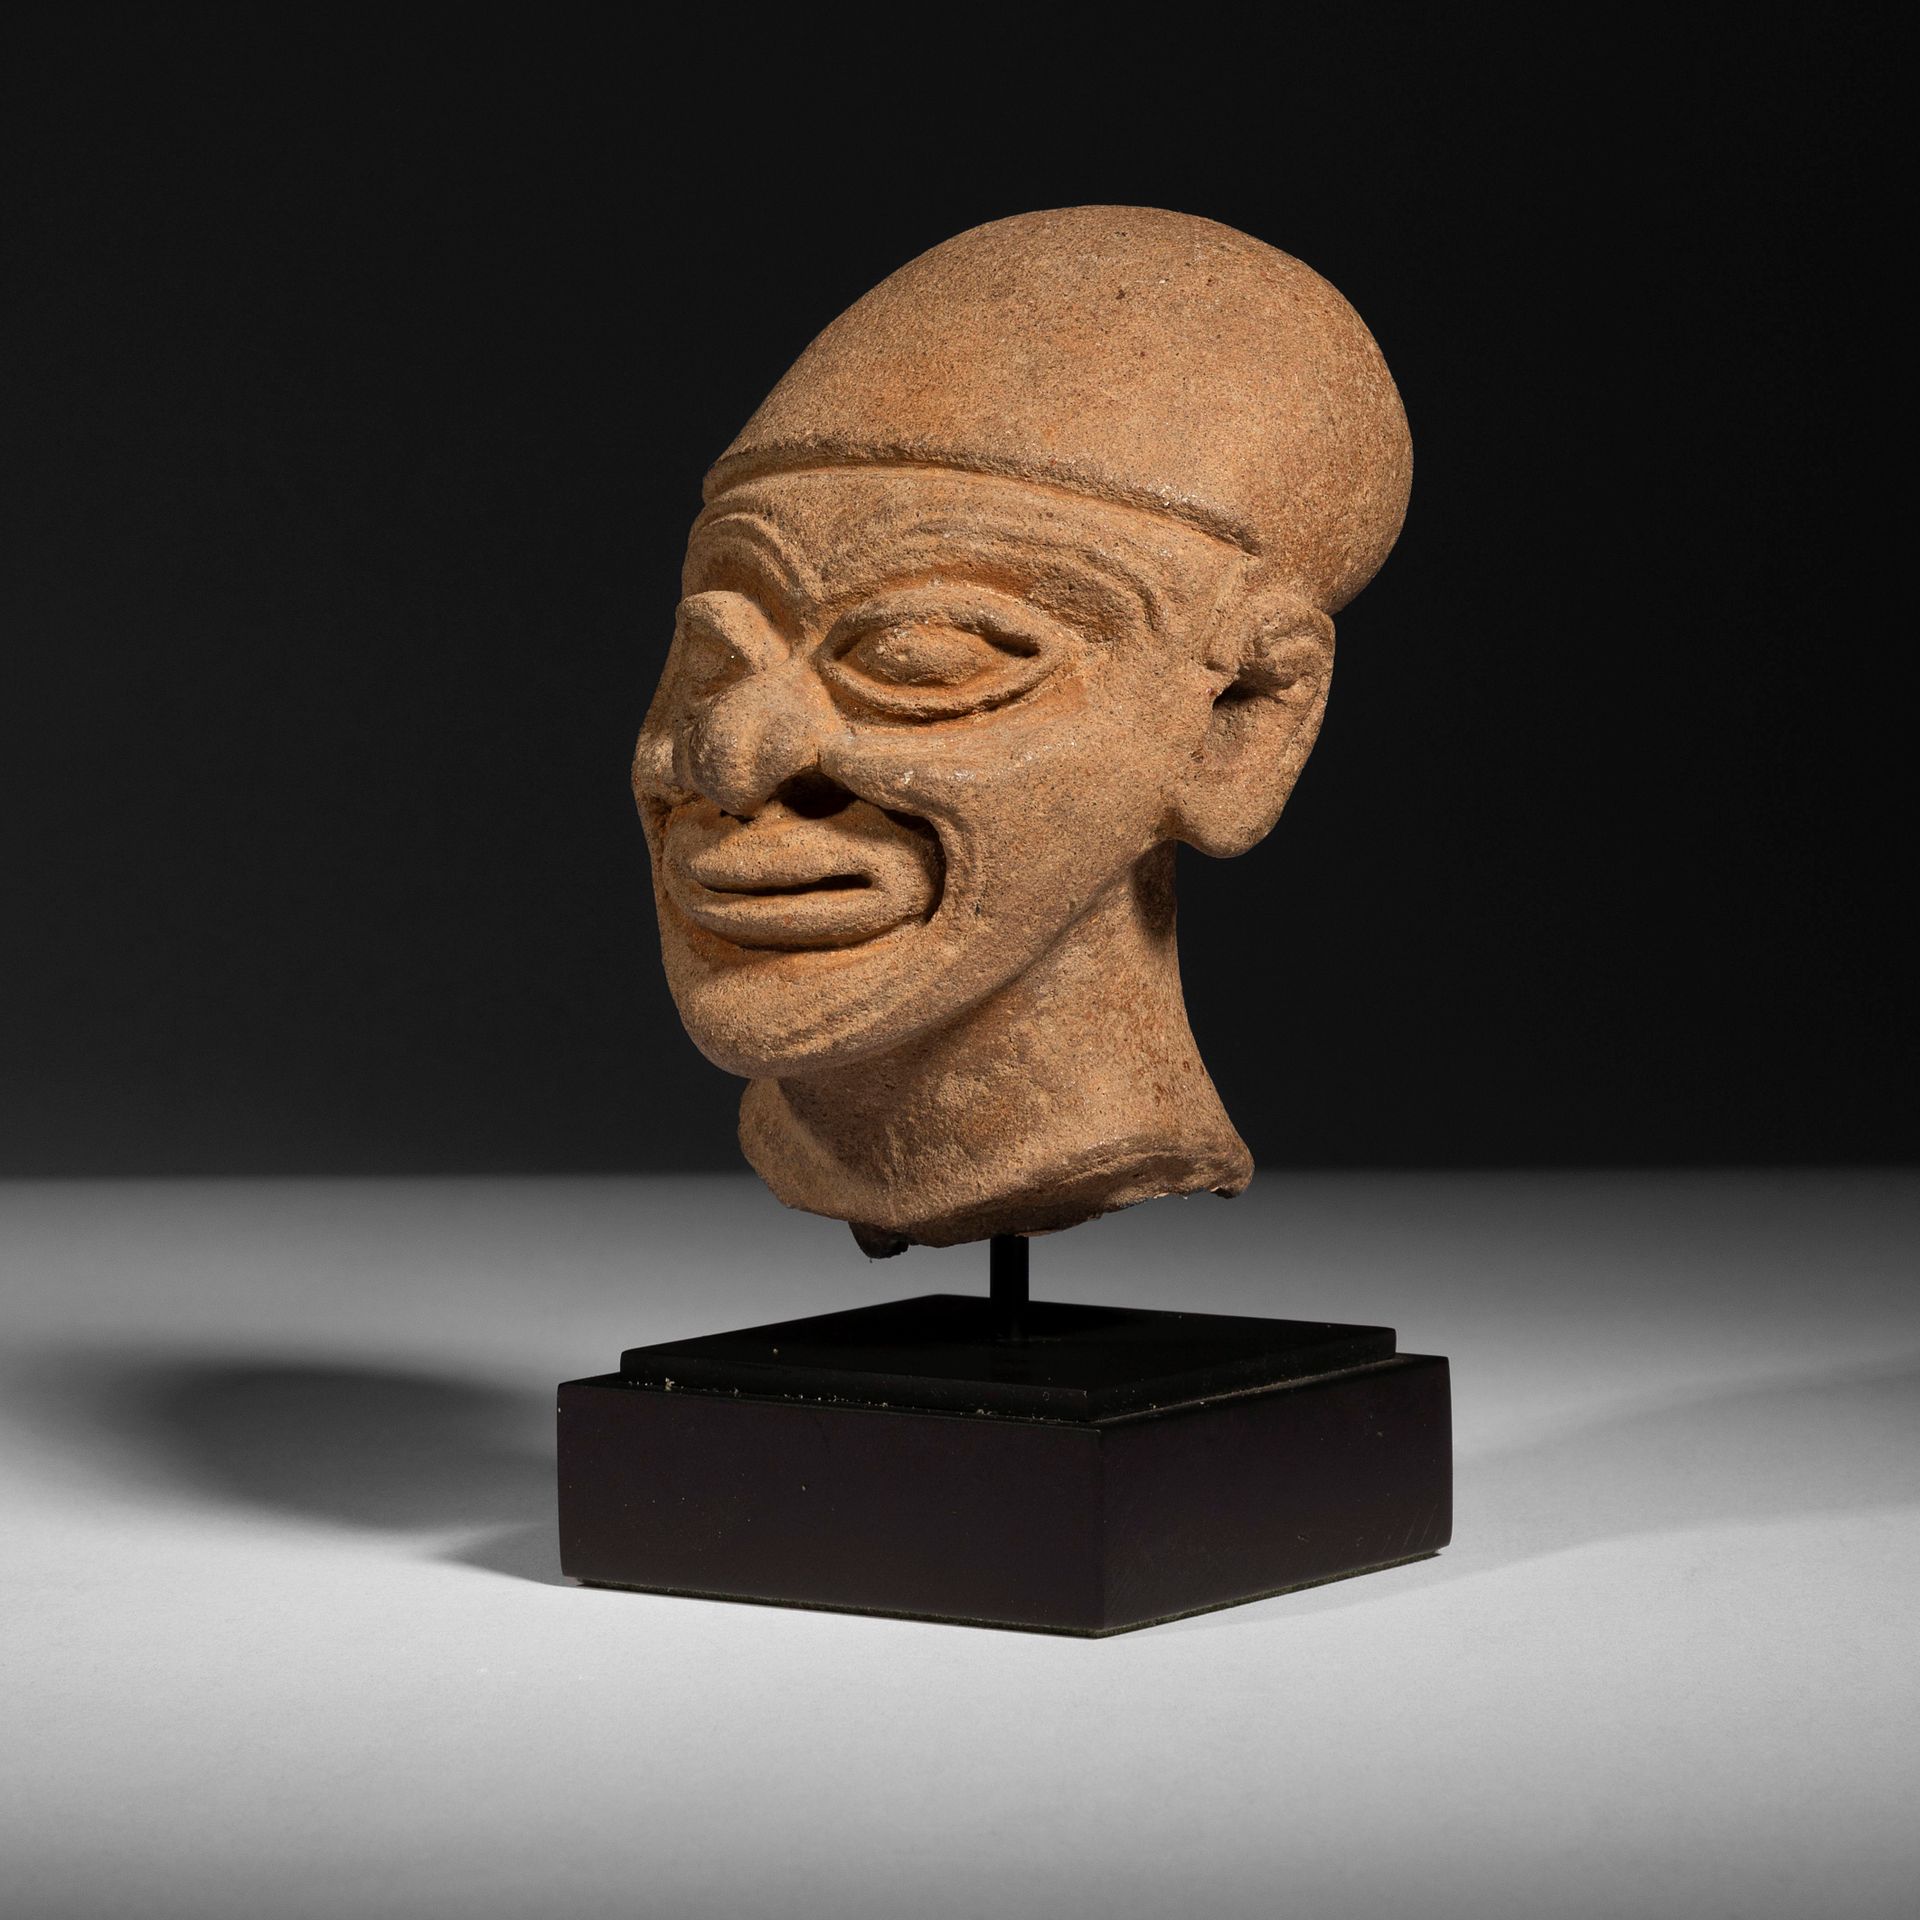 Null 一个满脸皱纹的人的美丽微笑的头像，一个古代雕像的碎片。

Tumaco-La Tolita文化，约公元前300年至公元300年，厄瓜多尔或哥伦比亚

&hellip;